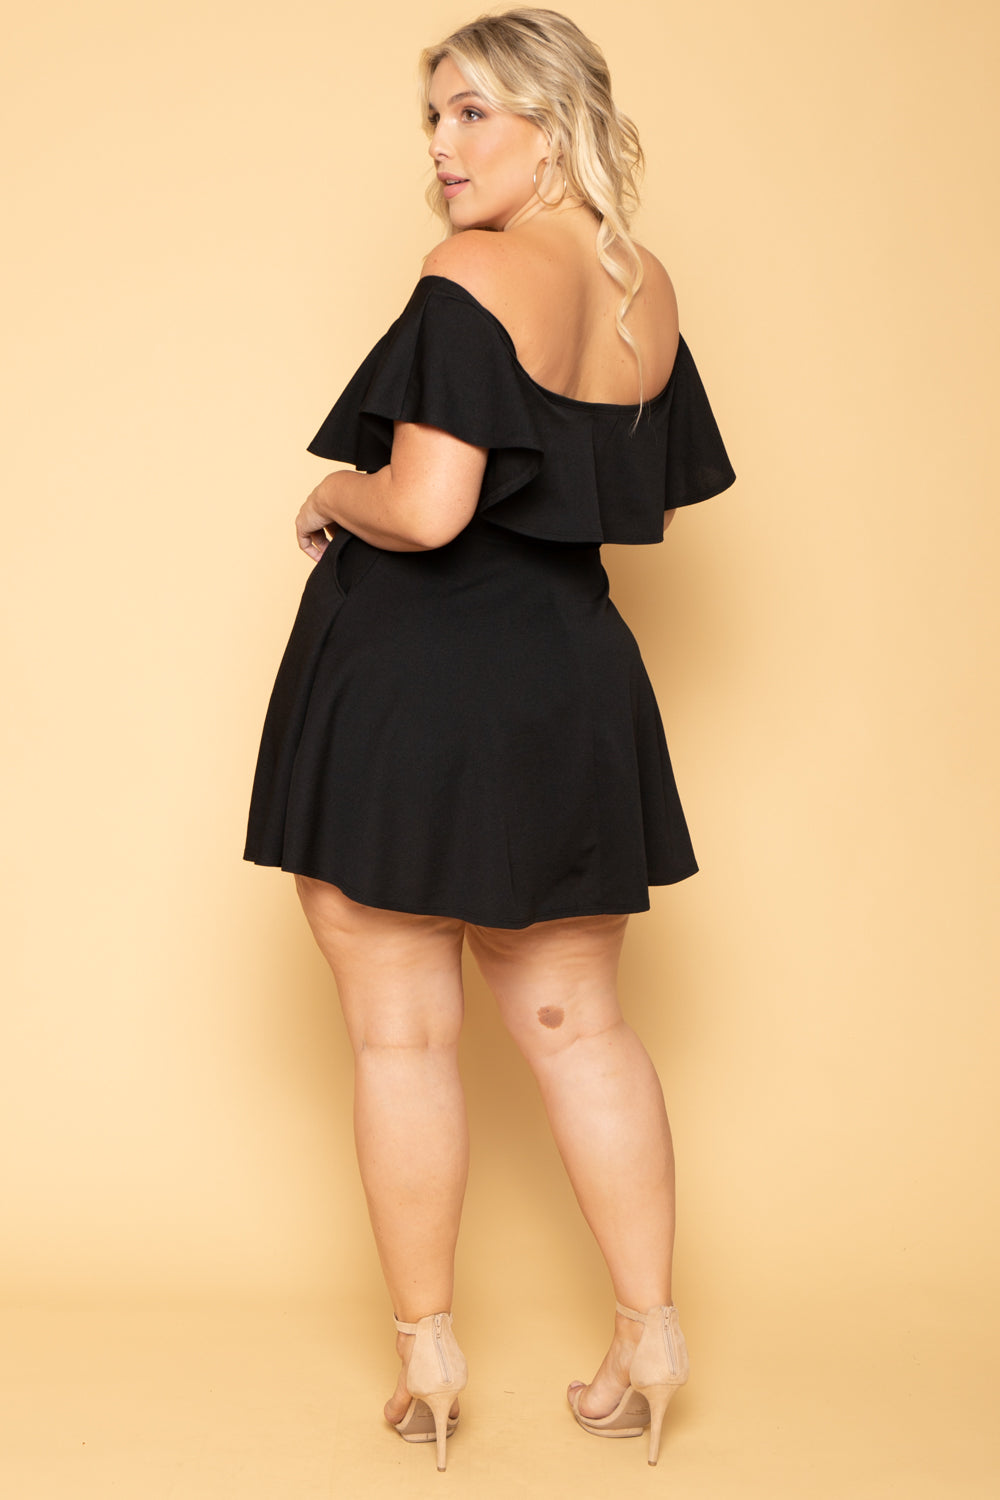 Curvy Sense Dresses Plus Size Rosabel Dress- Black